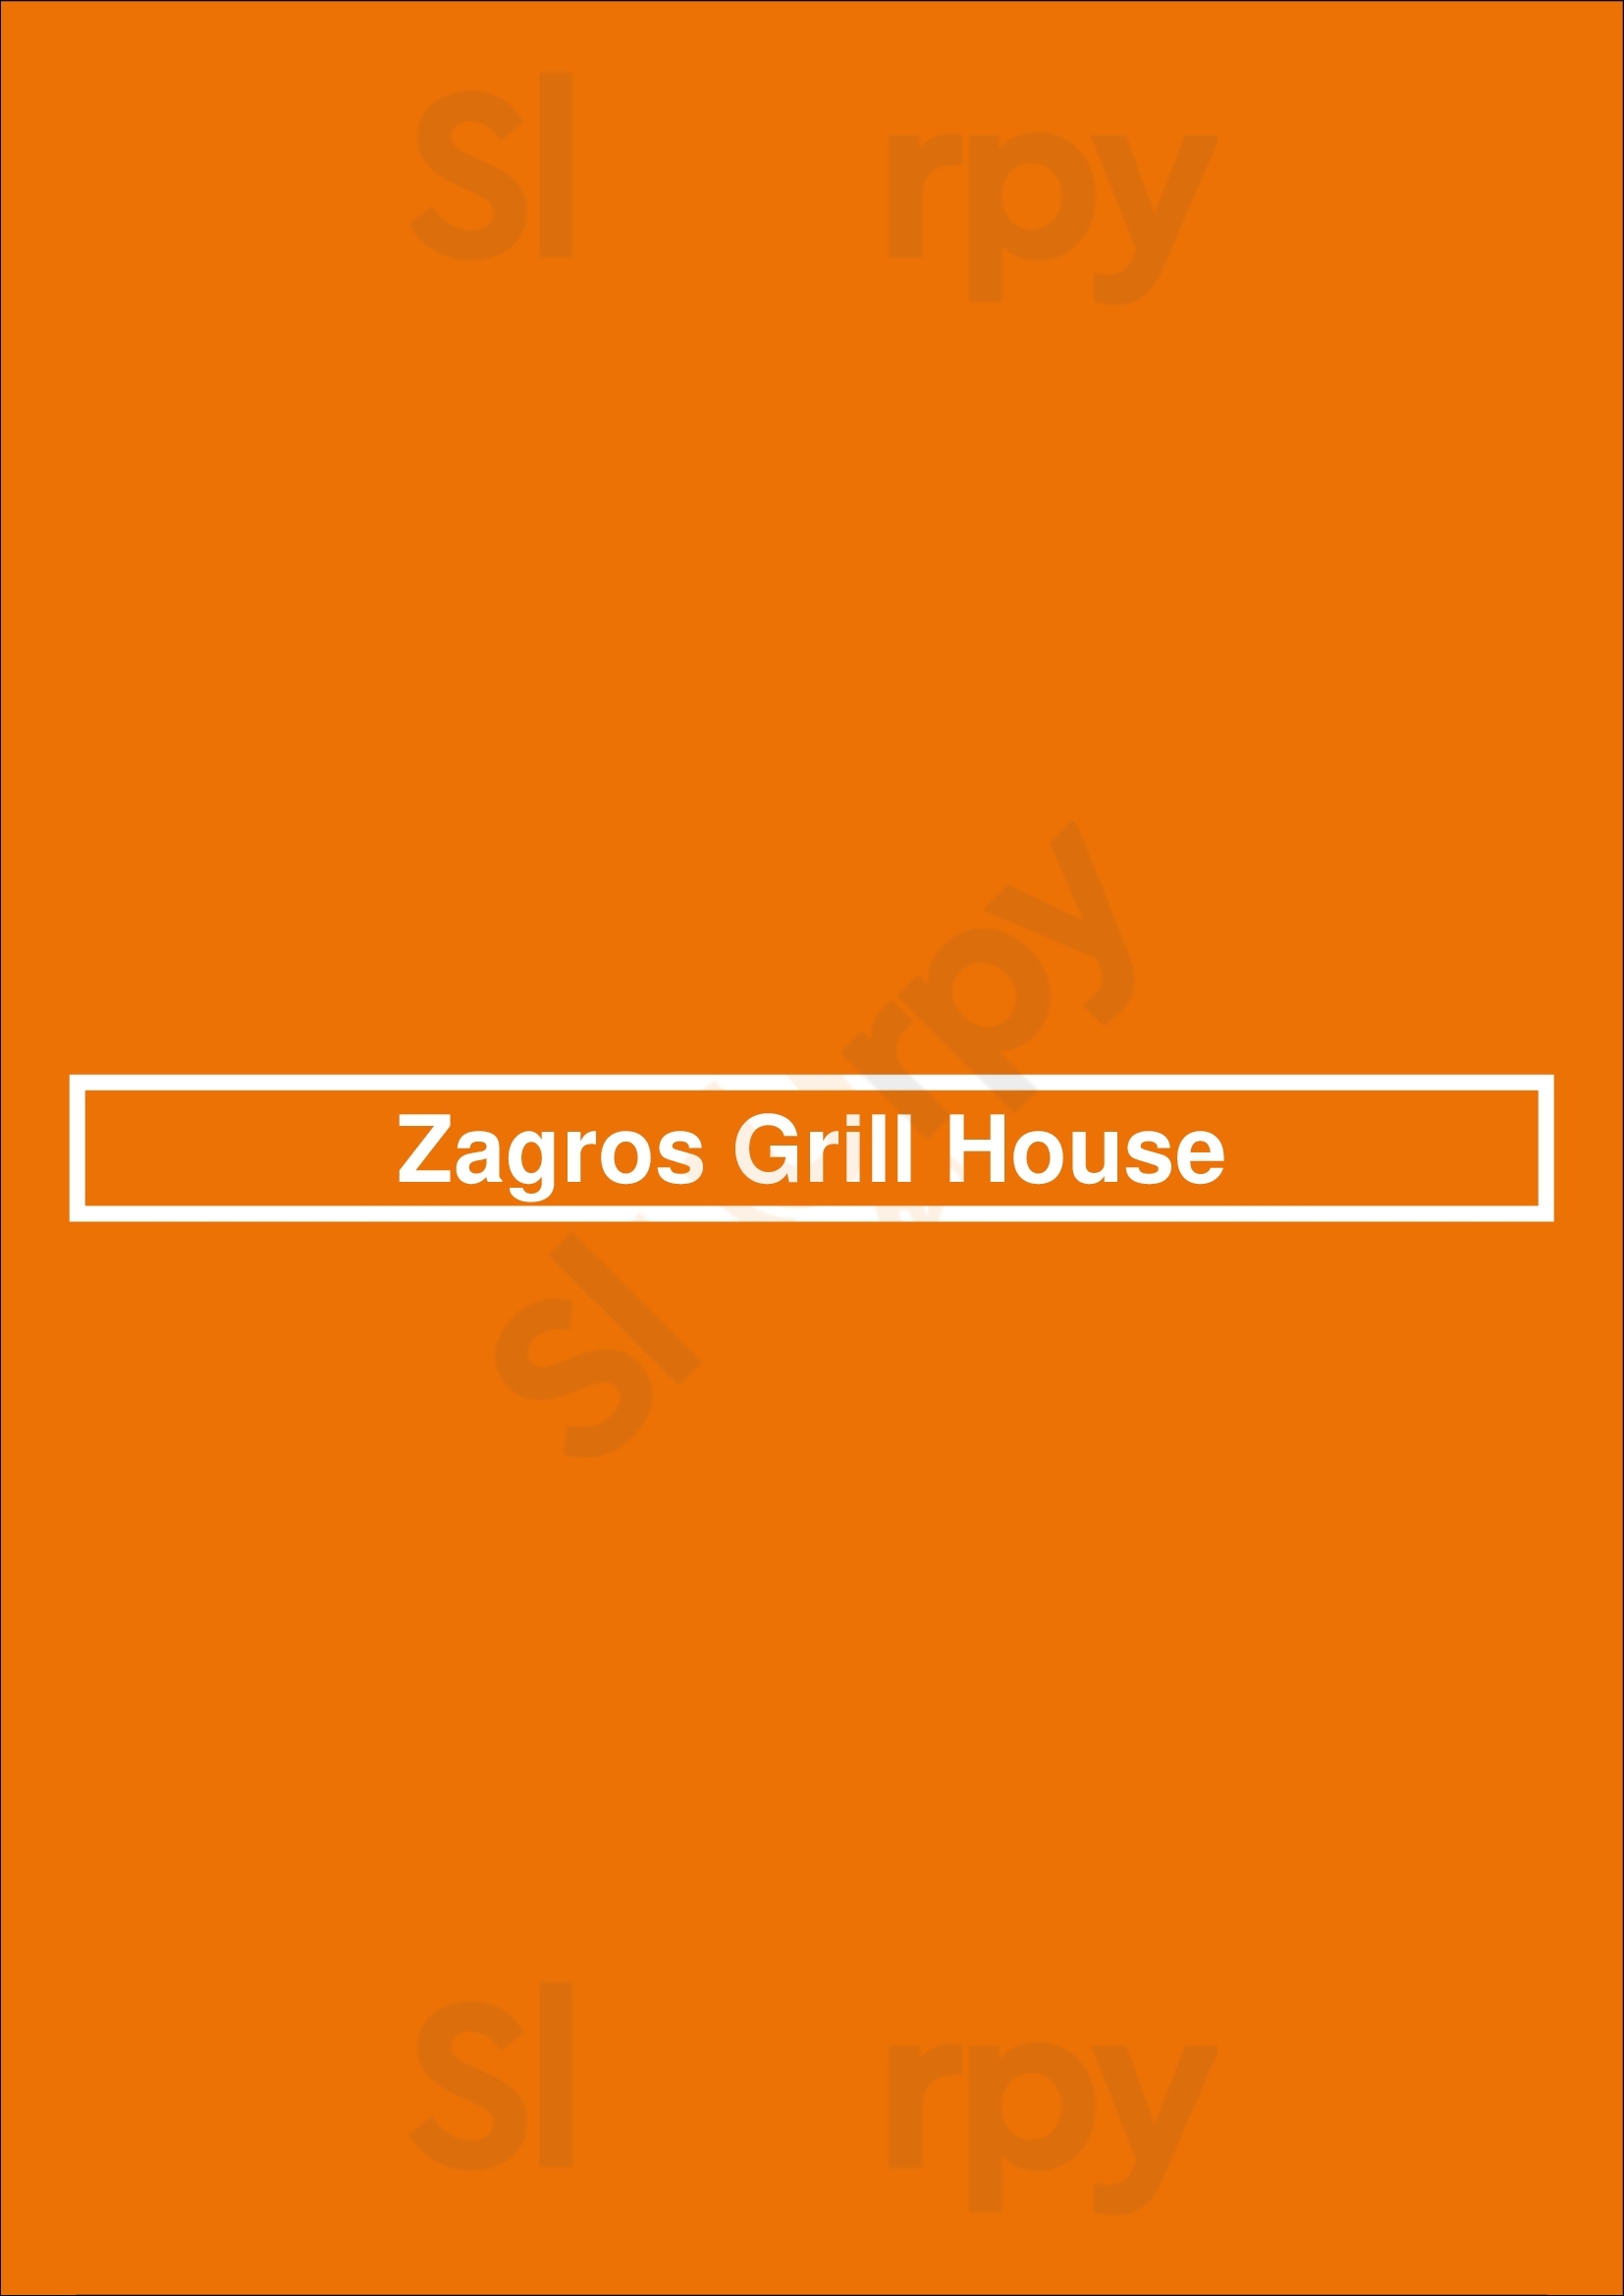 Zagros Grill House Oakville Menu - 1